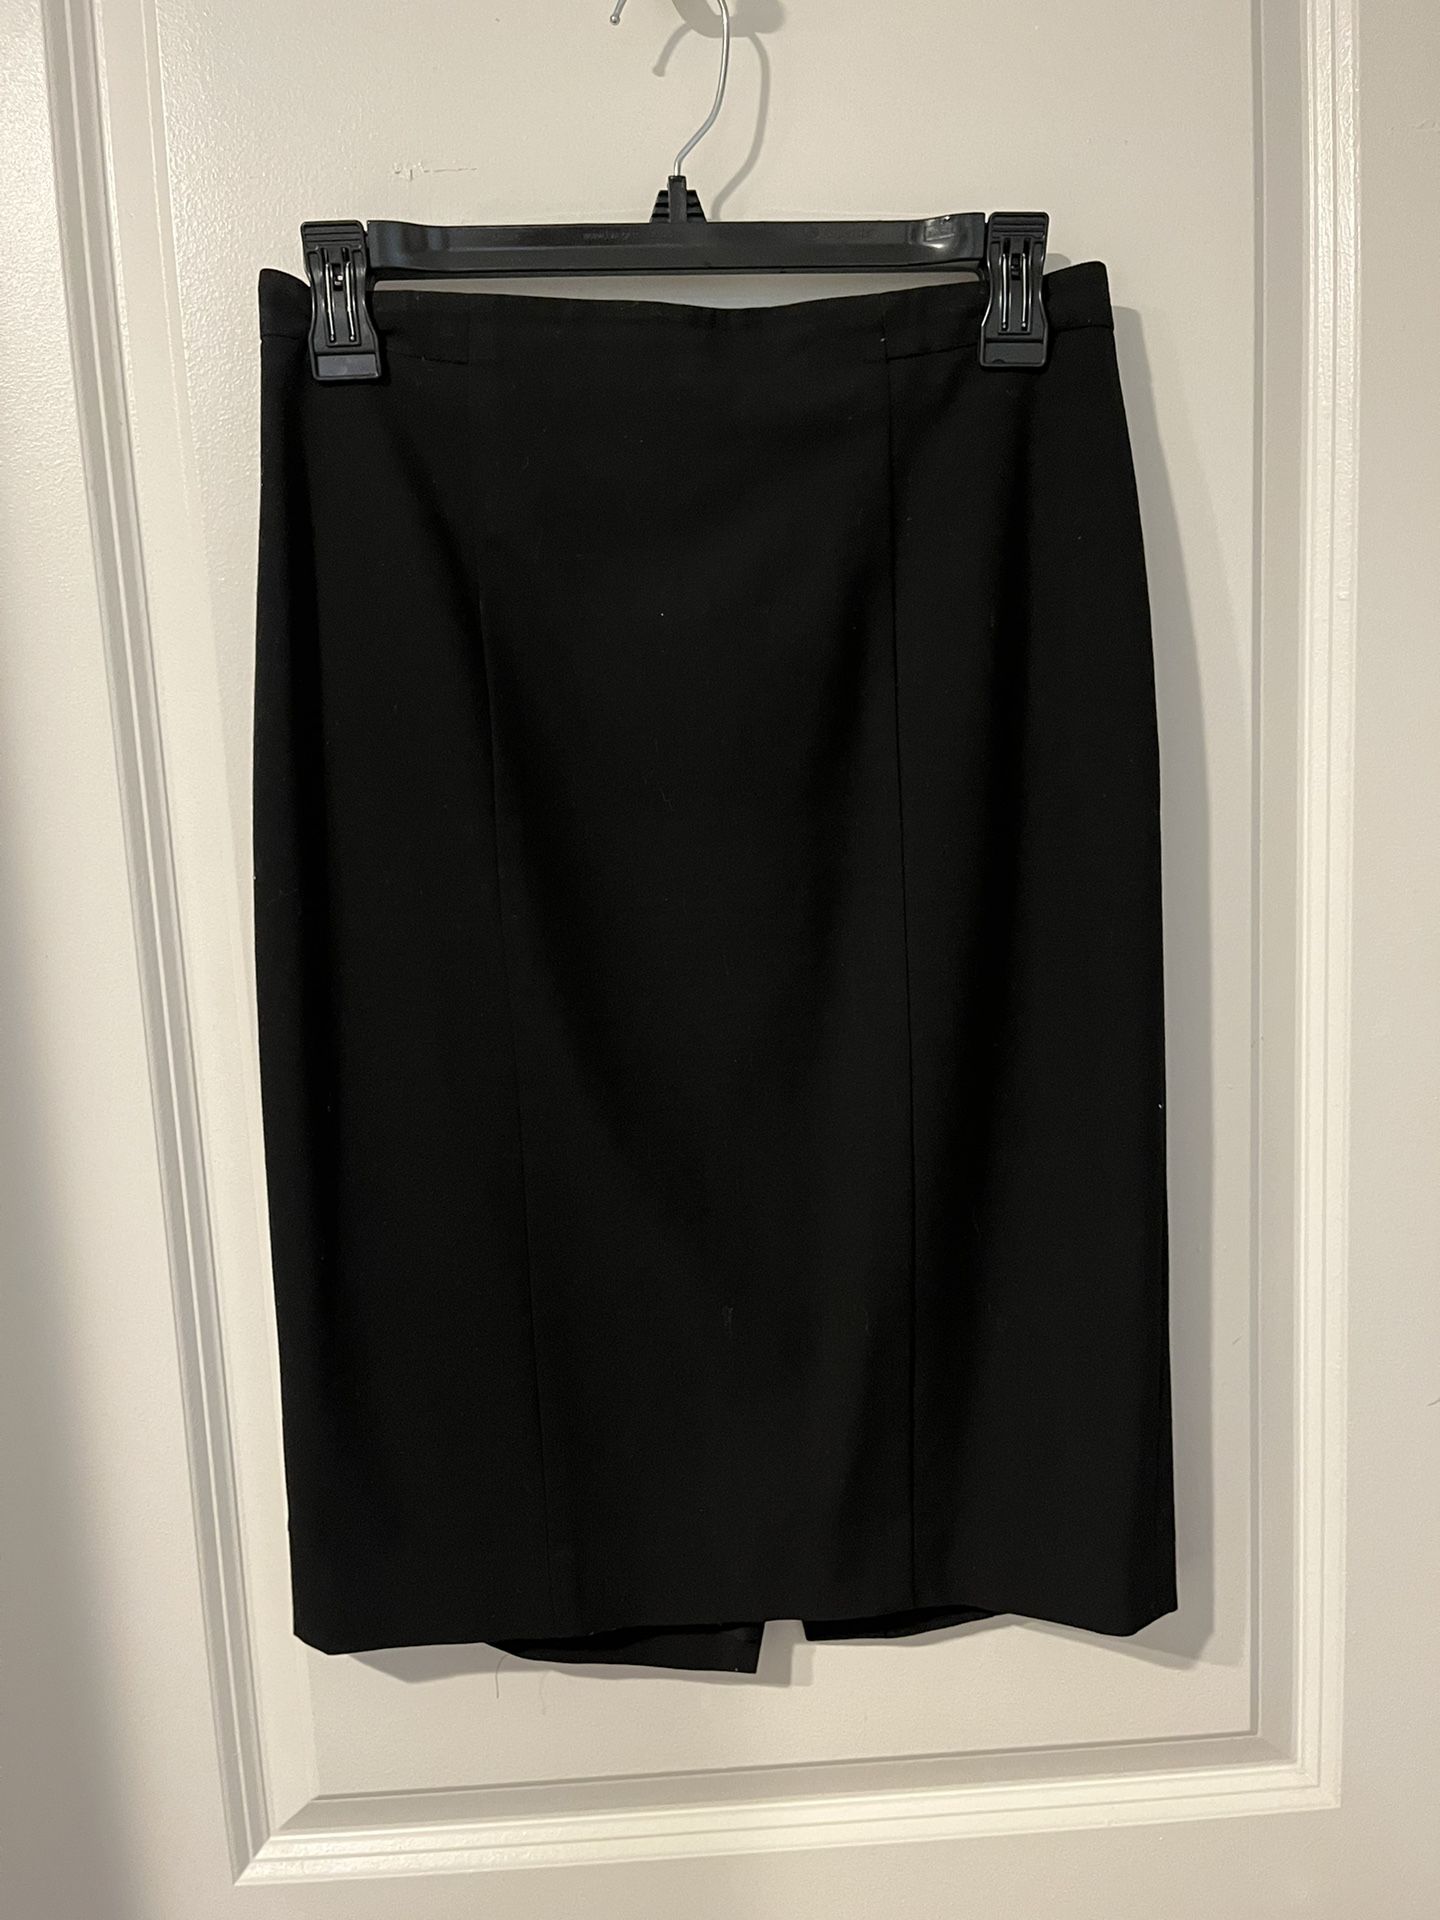 Black Pencil Skirt 